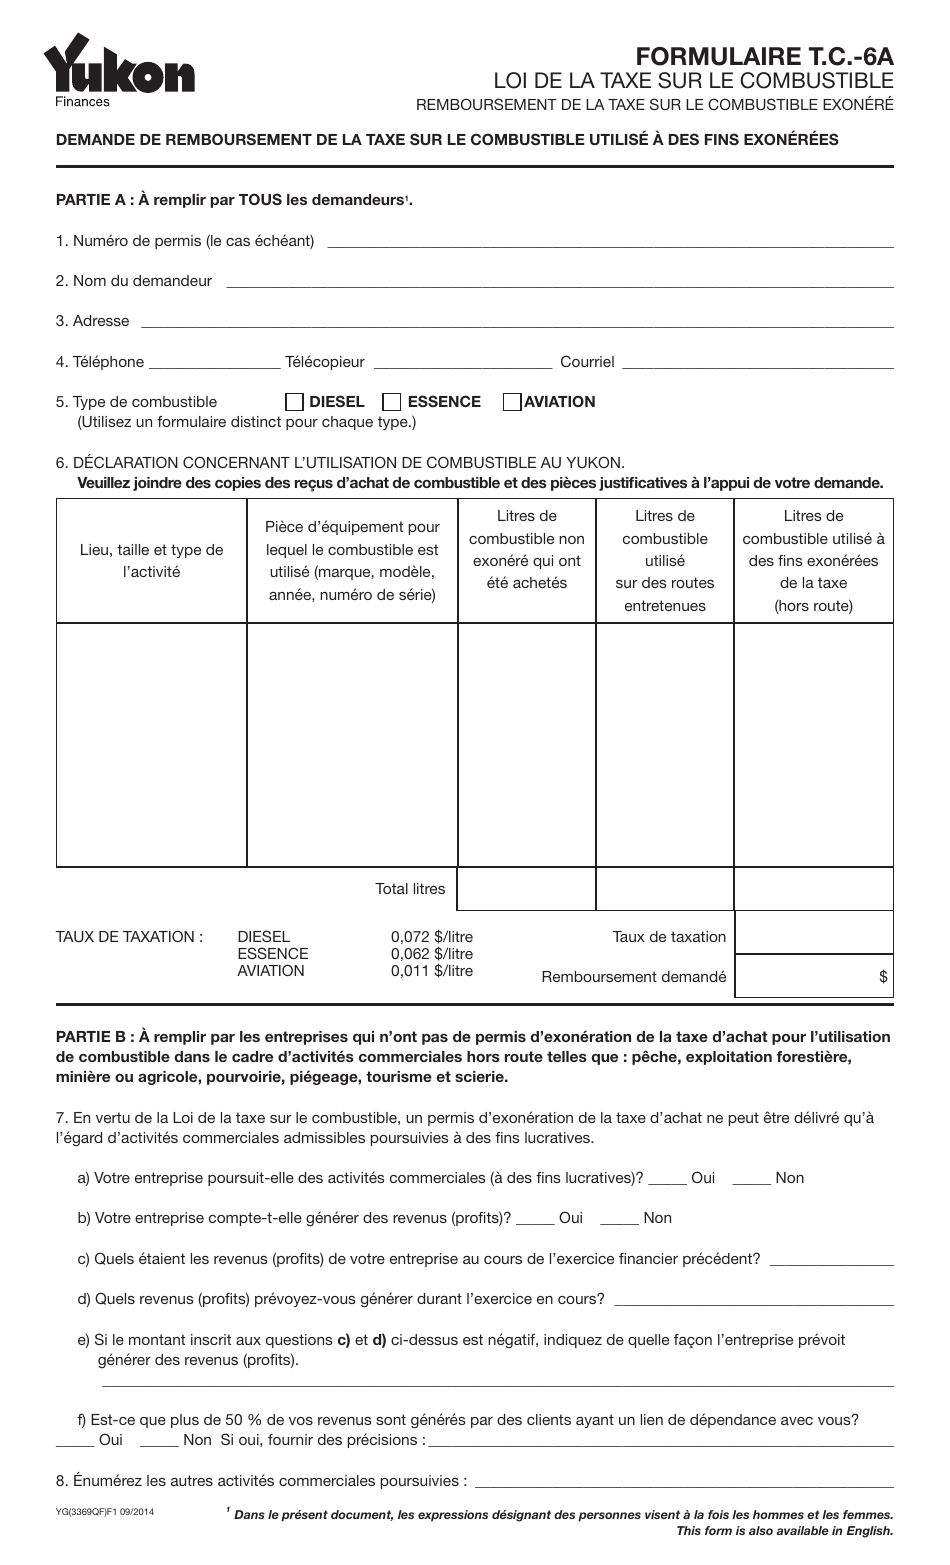 Forme YG3369 Loi De La Taxe Sur Le Combustible - Demande 6a - Yukon, Canada (French), Page 1